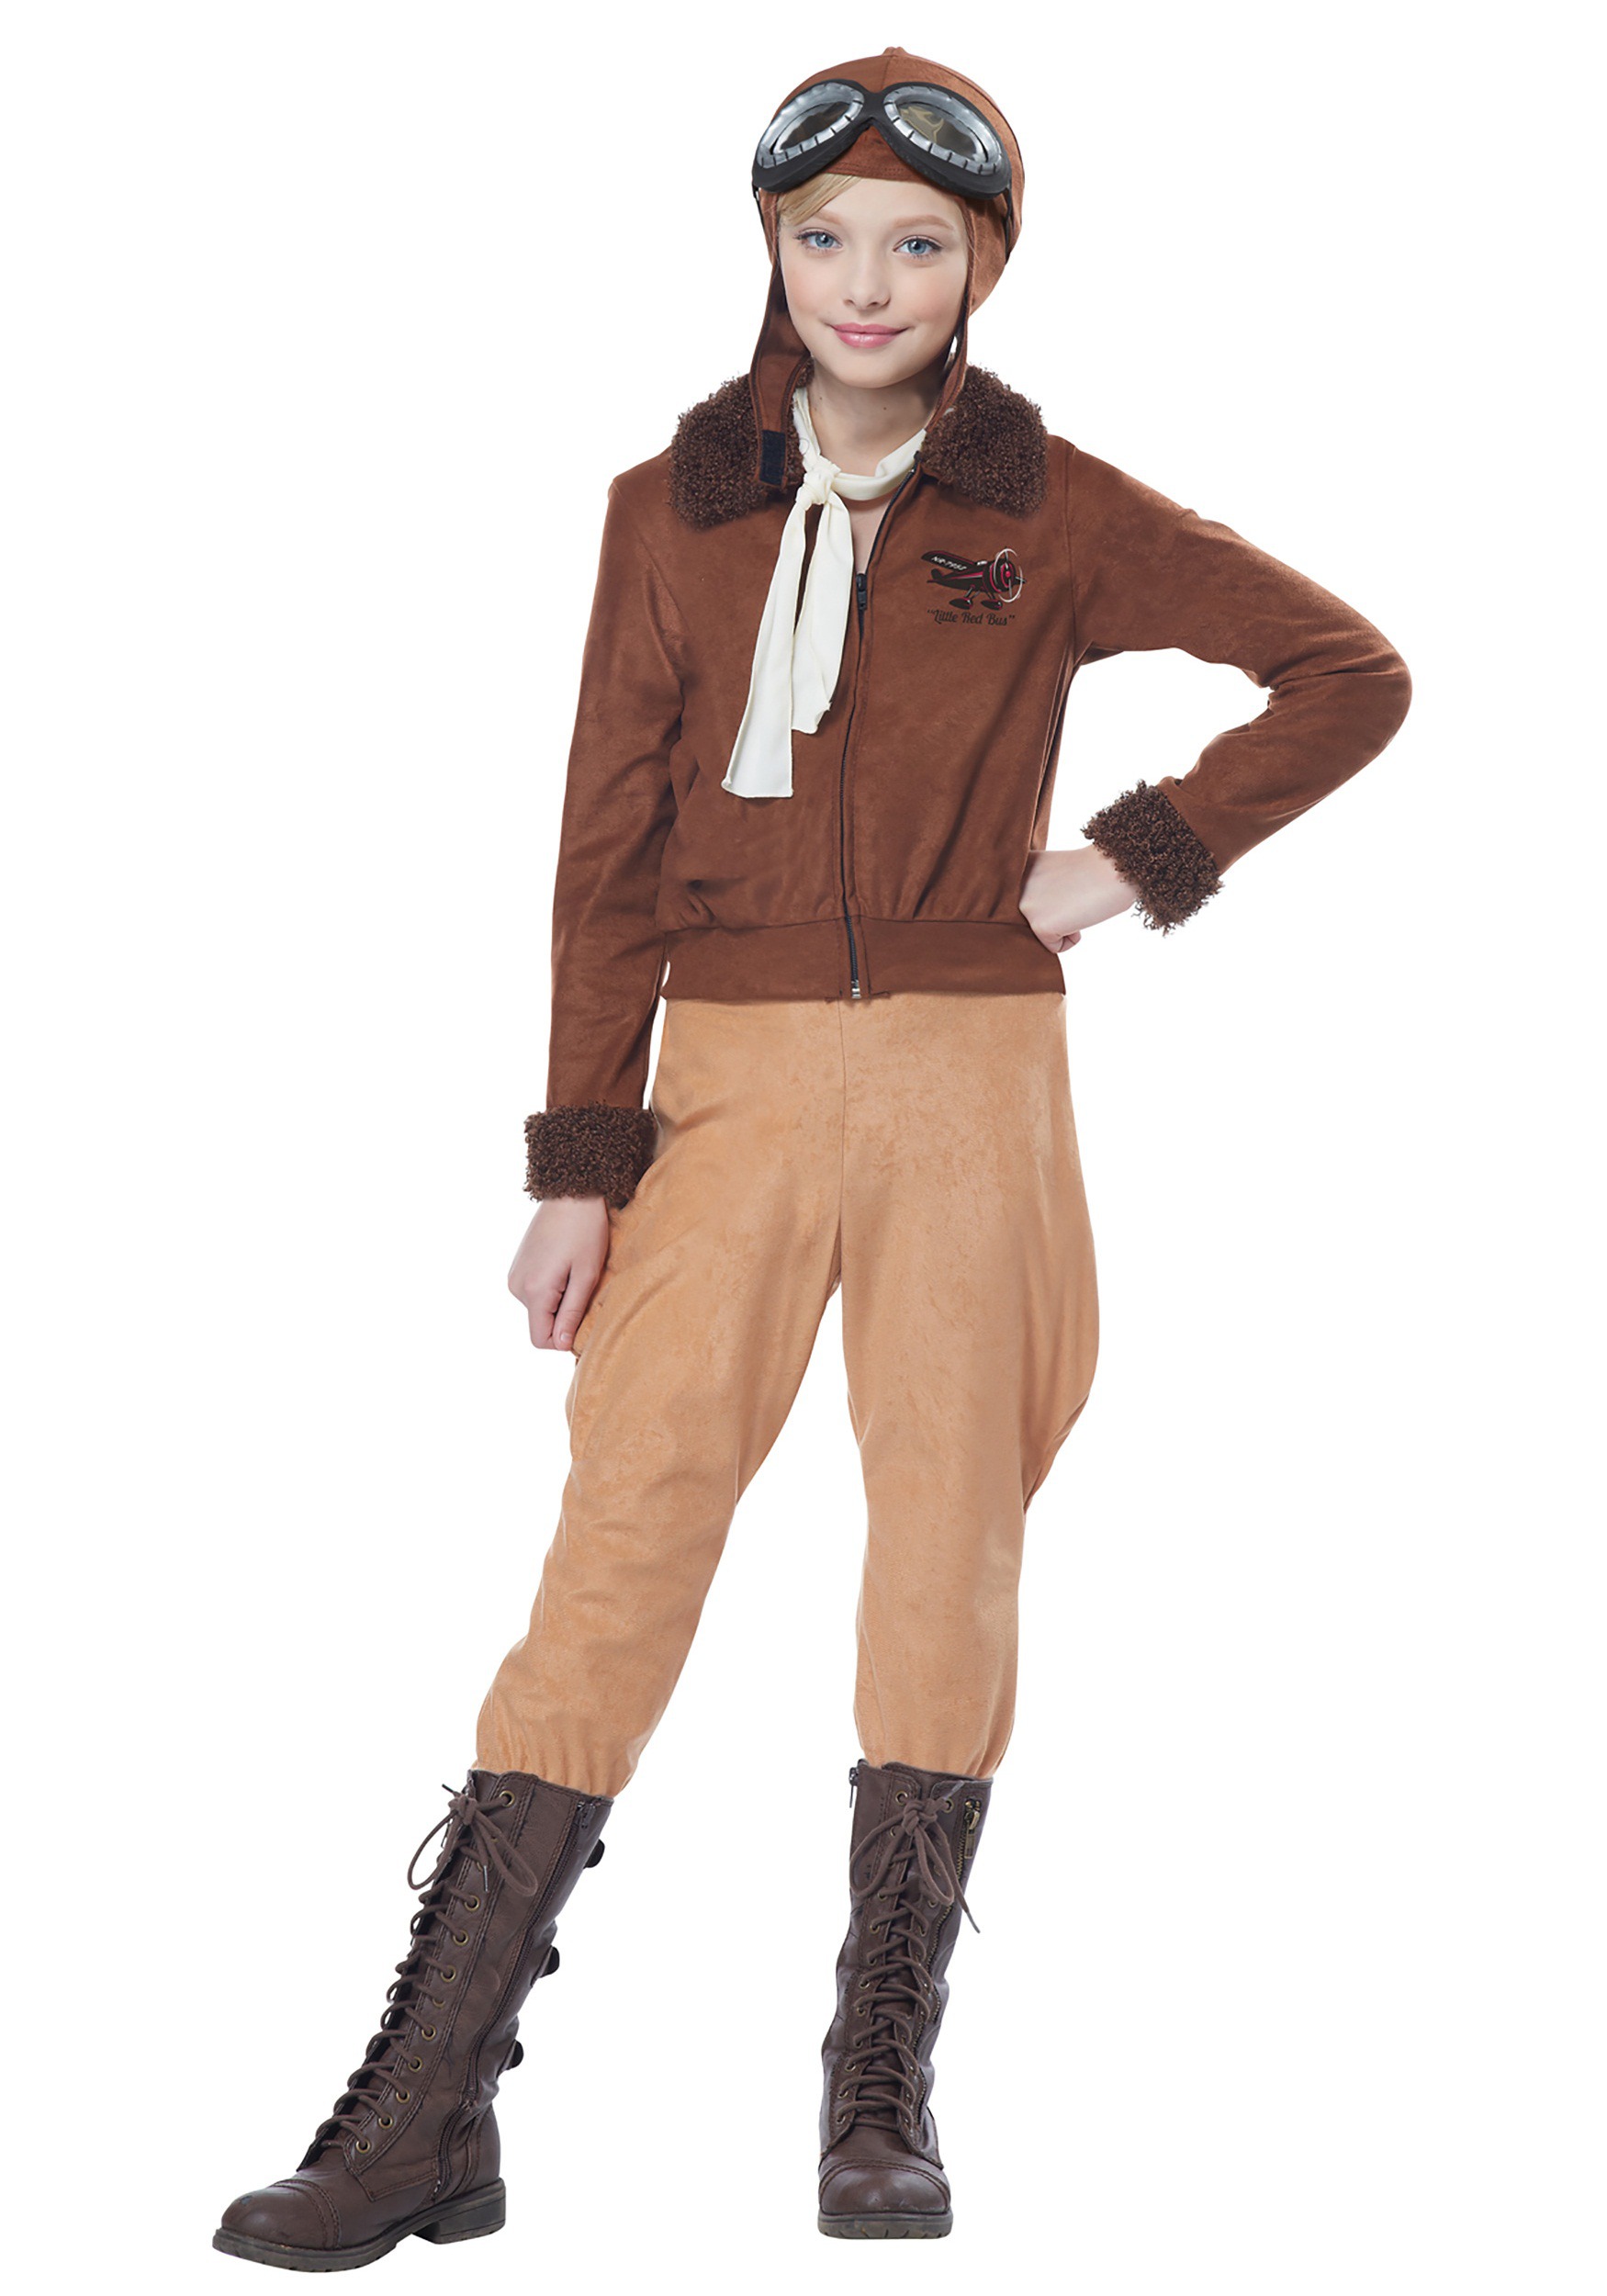 Amelia Earhart/Aviator Costume for Girls | Historical Costume